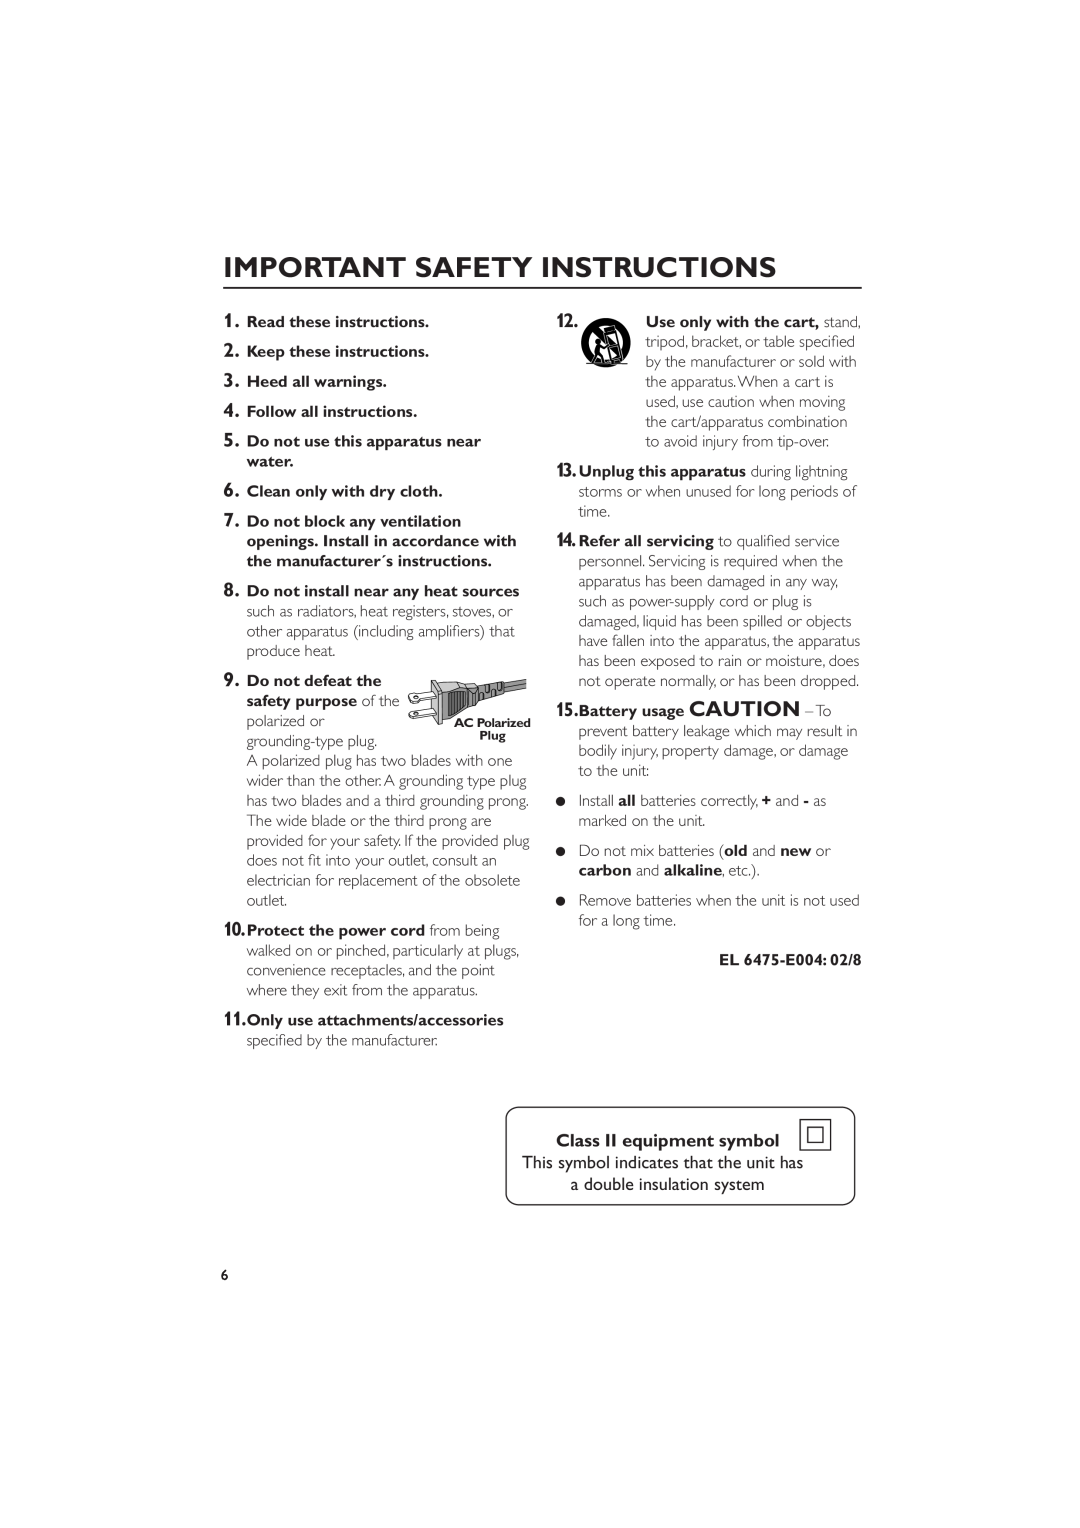 Magnavox MAS-100/37 warranty Class II equipment symbol, Important Safety Instructions 